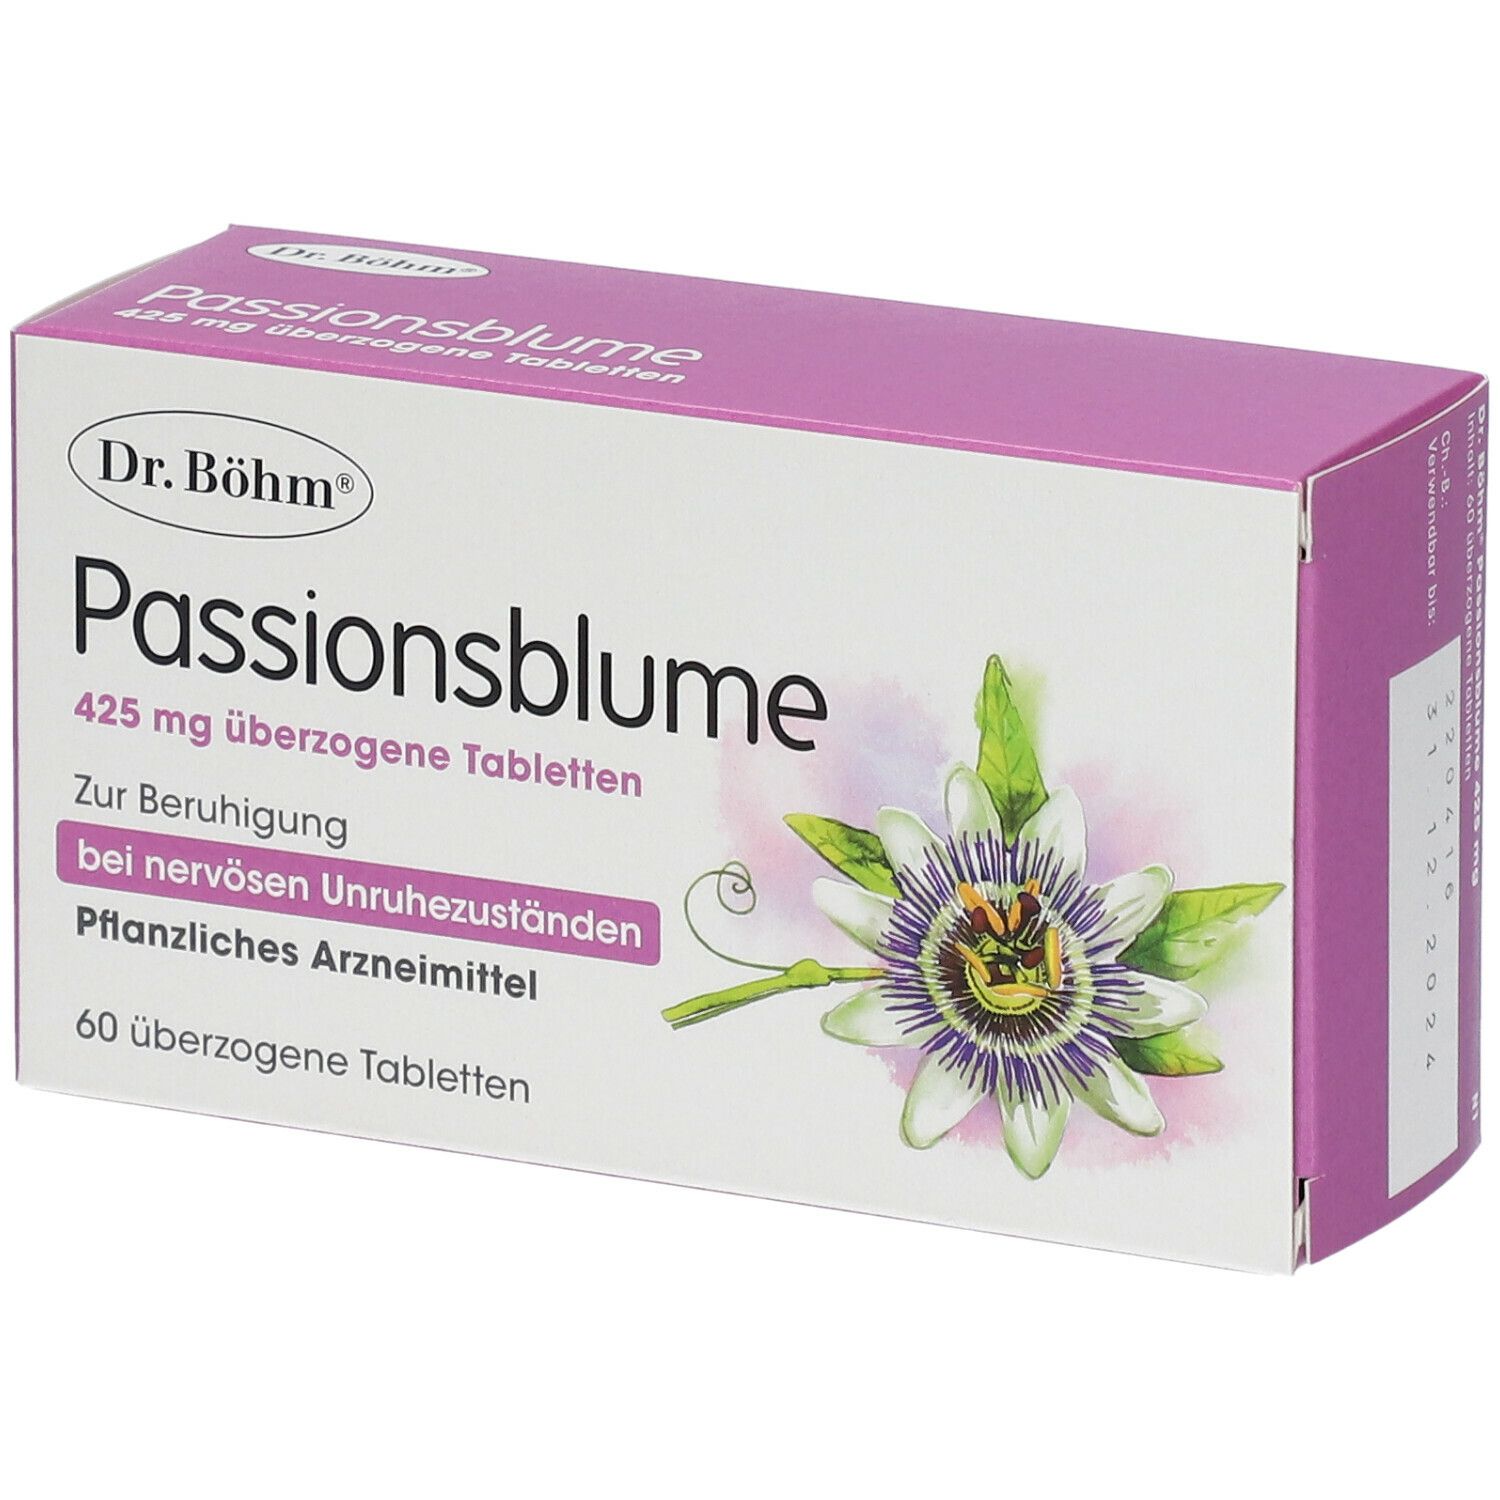 Dr. Böhm® Passionsblume 425 mg